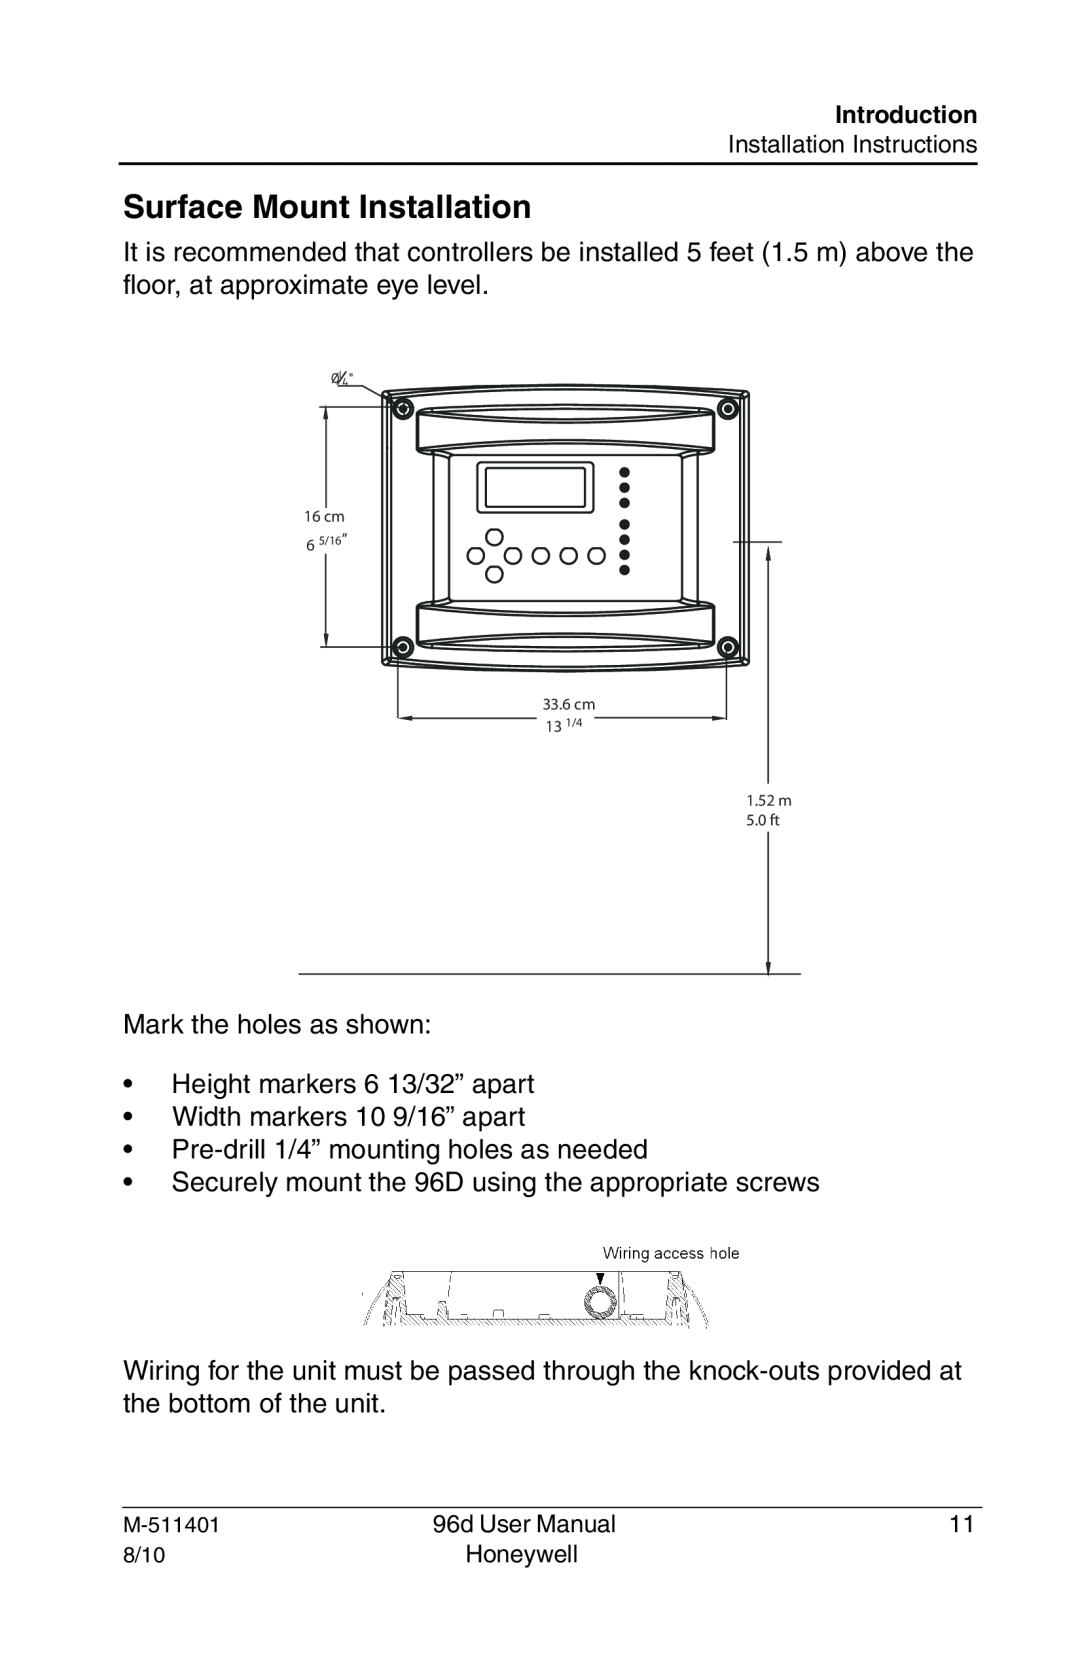 Honeywell 96D user manual Surface Mount Installation 